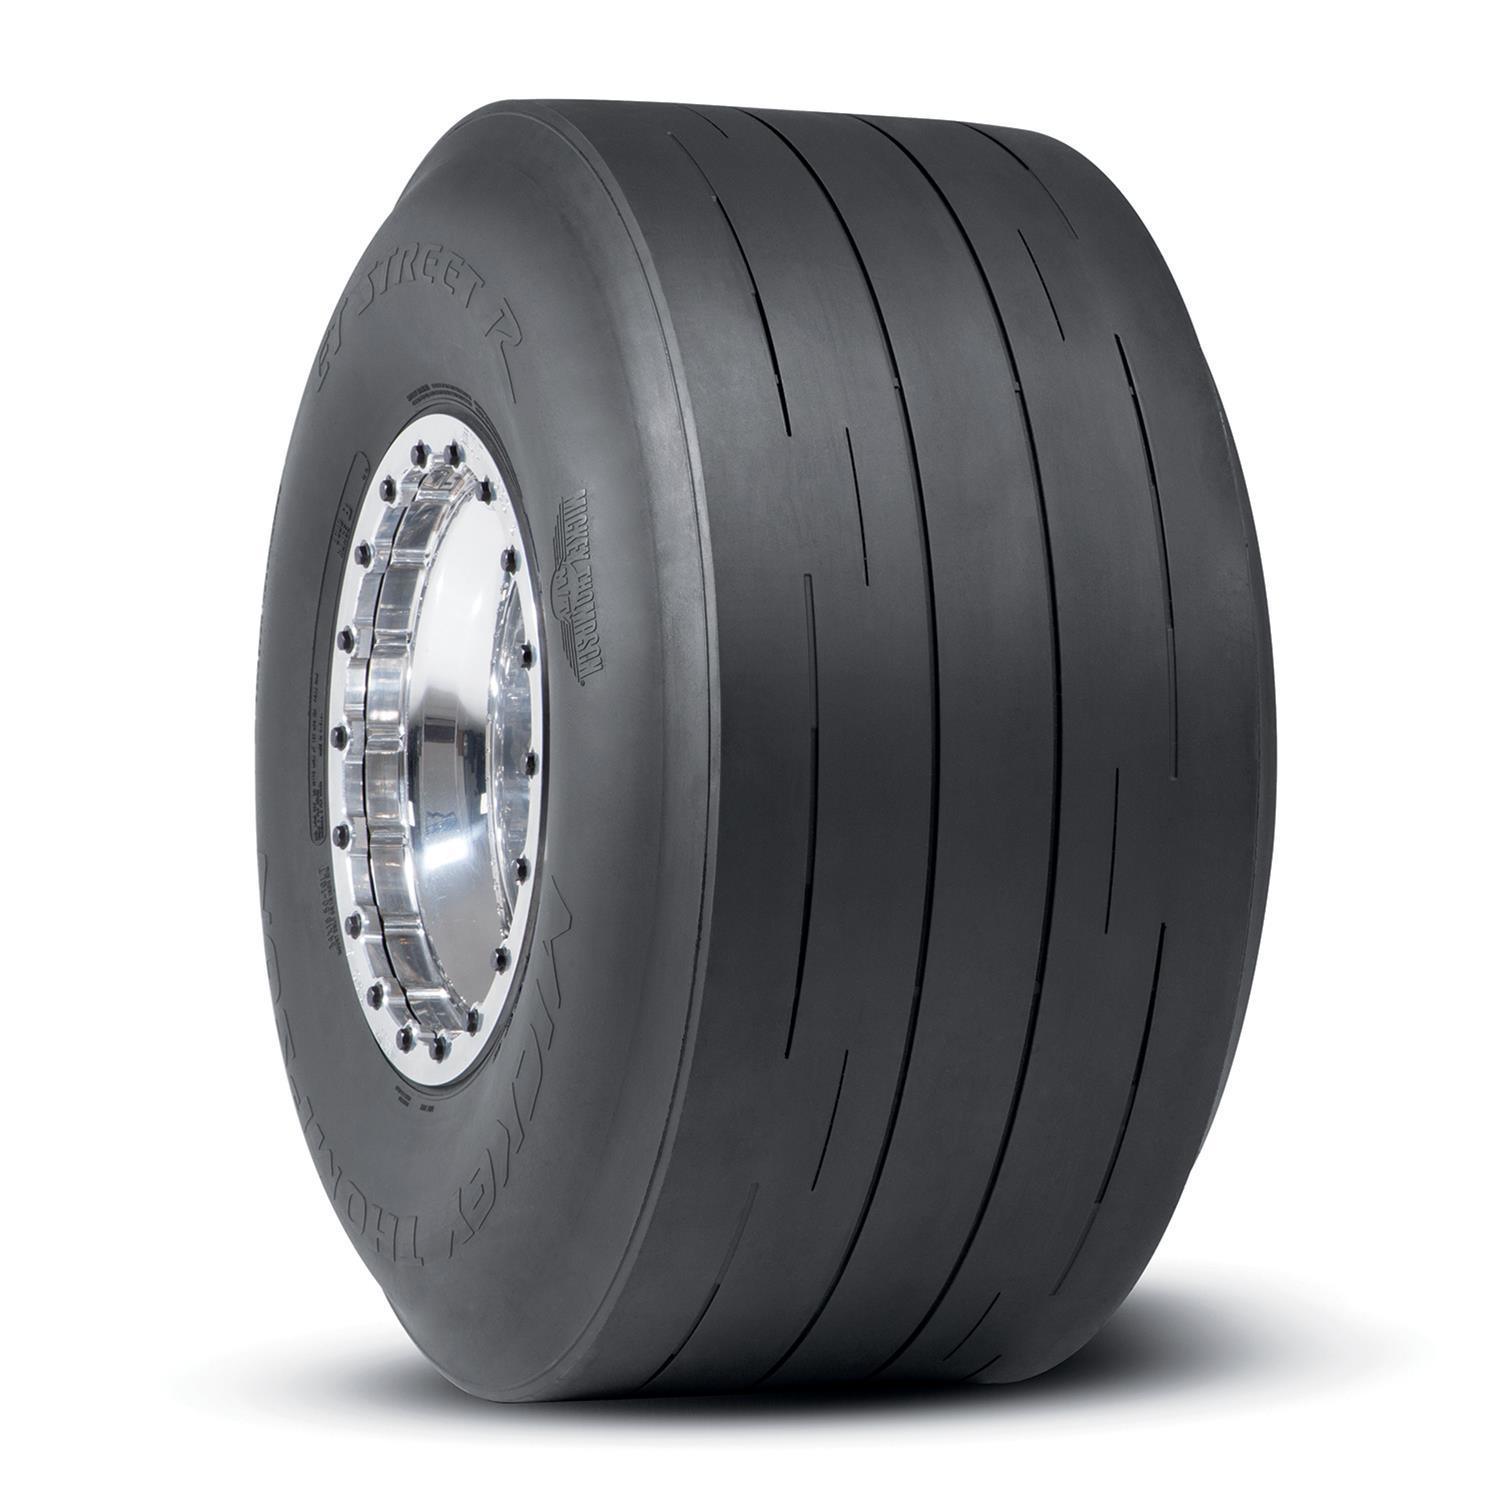 28x11.50-15LT ET Street R Tire - Burlile Performance Products